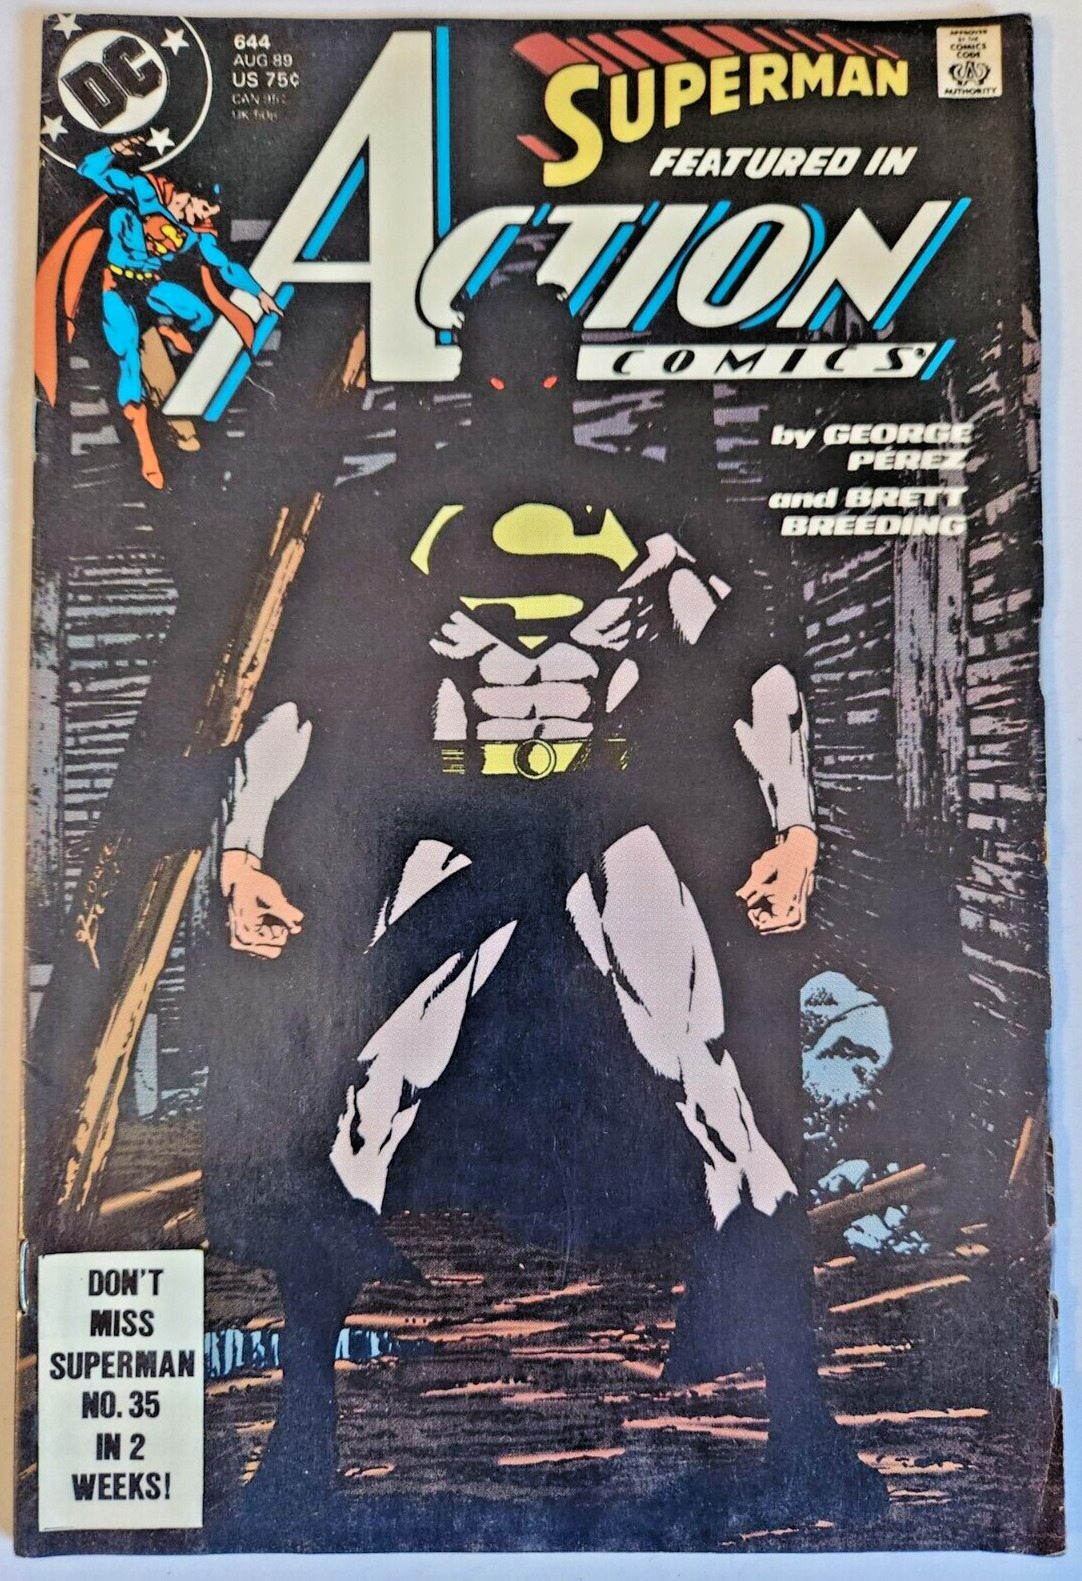 ACTION COMICS #644 - AUGUST 1989 Superman George Perez Brett Breeding